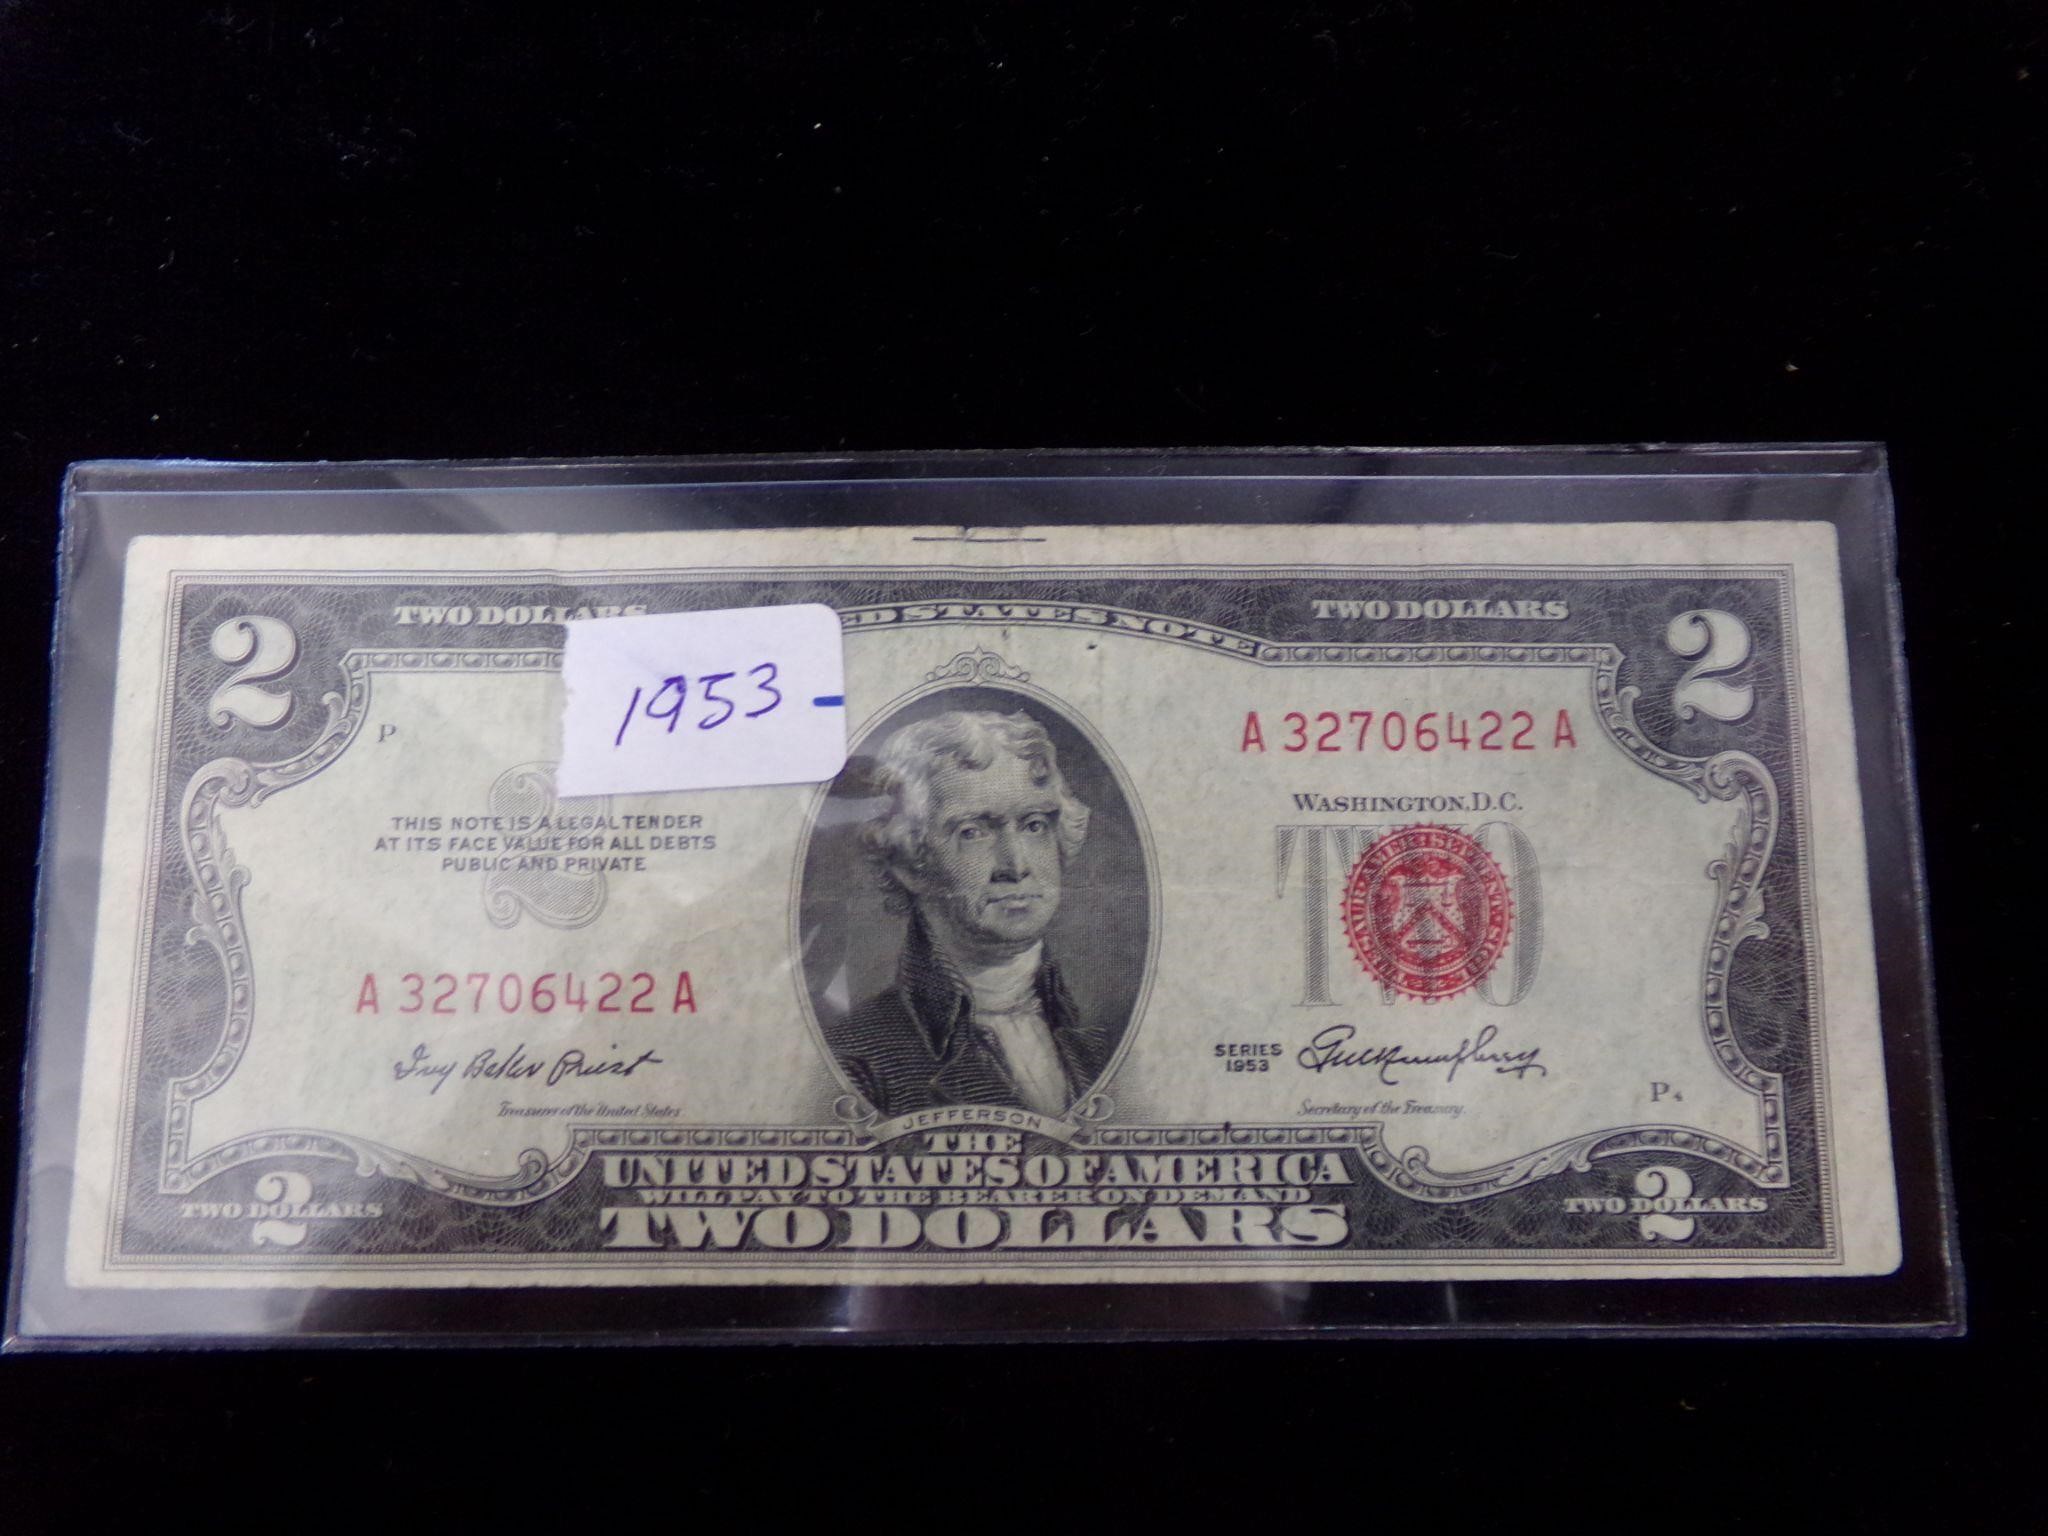 1953 Red seal $2 bill